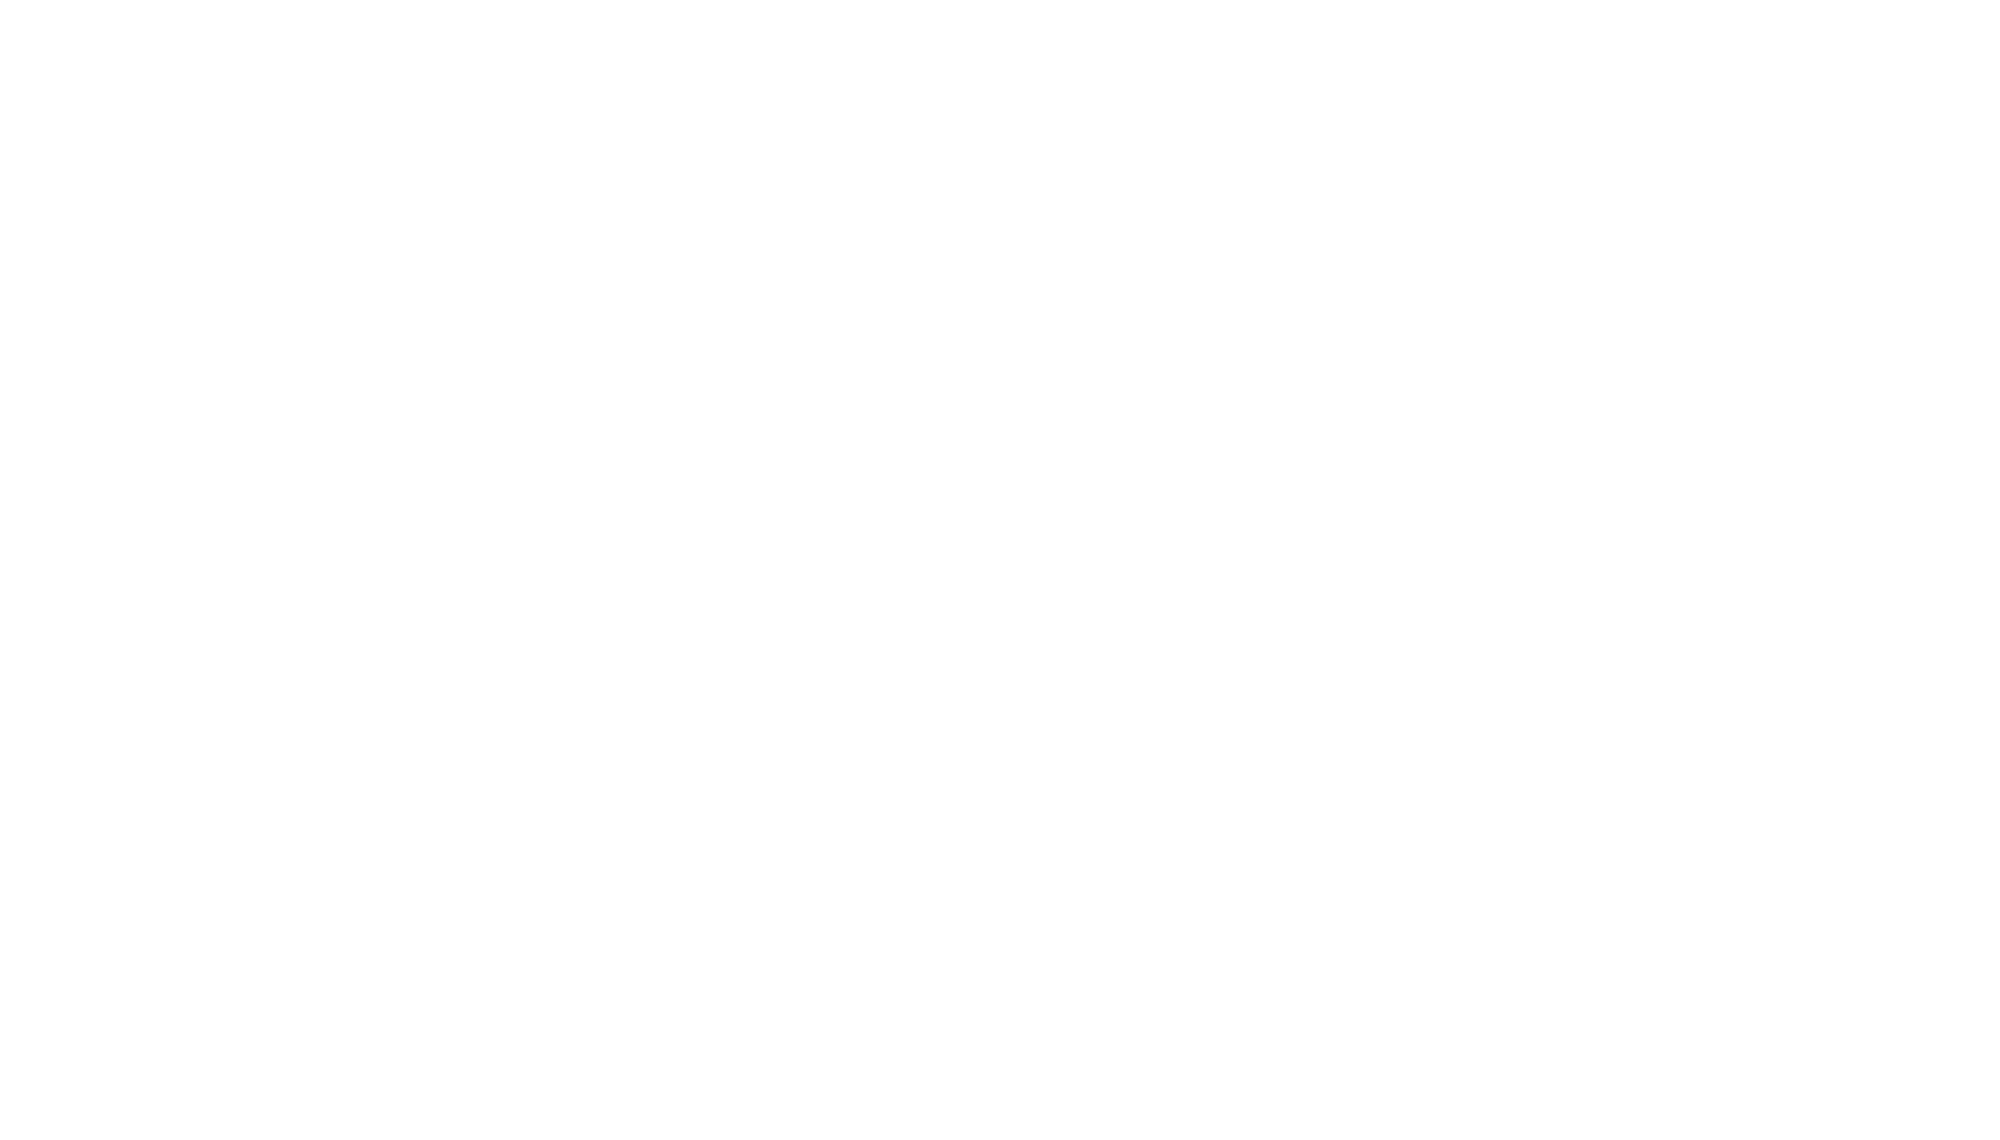 Nicole Saphos